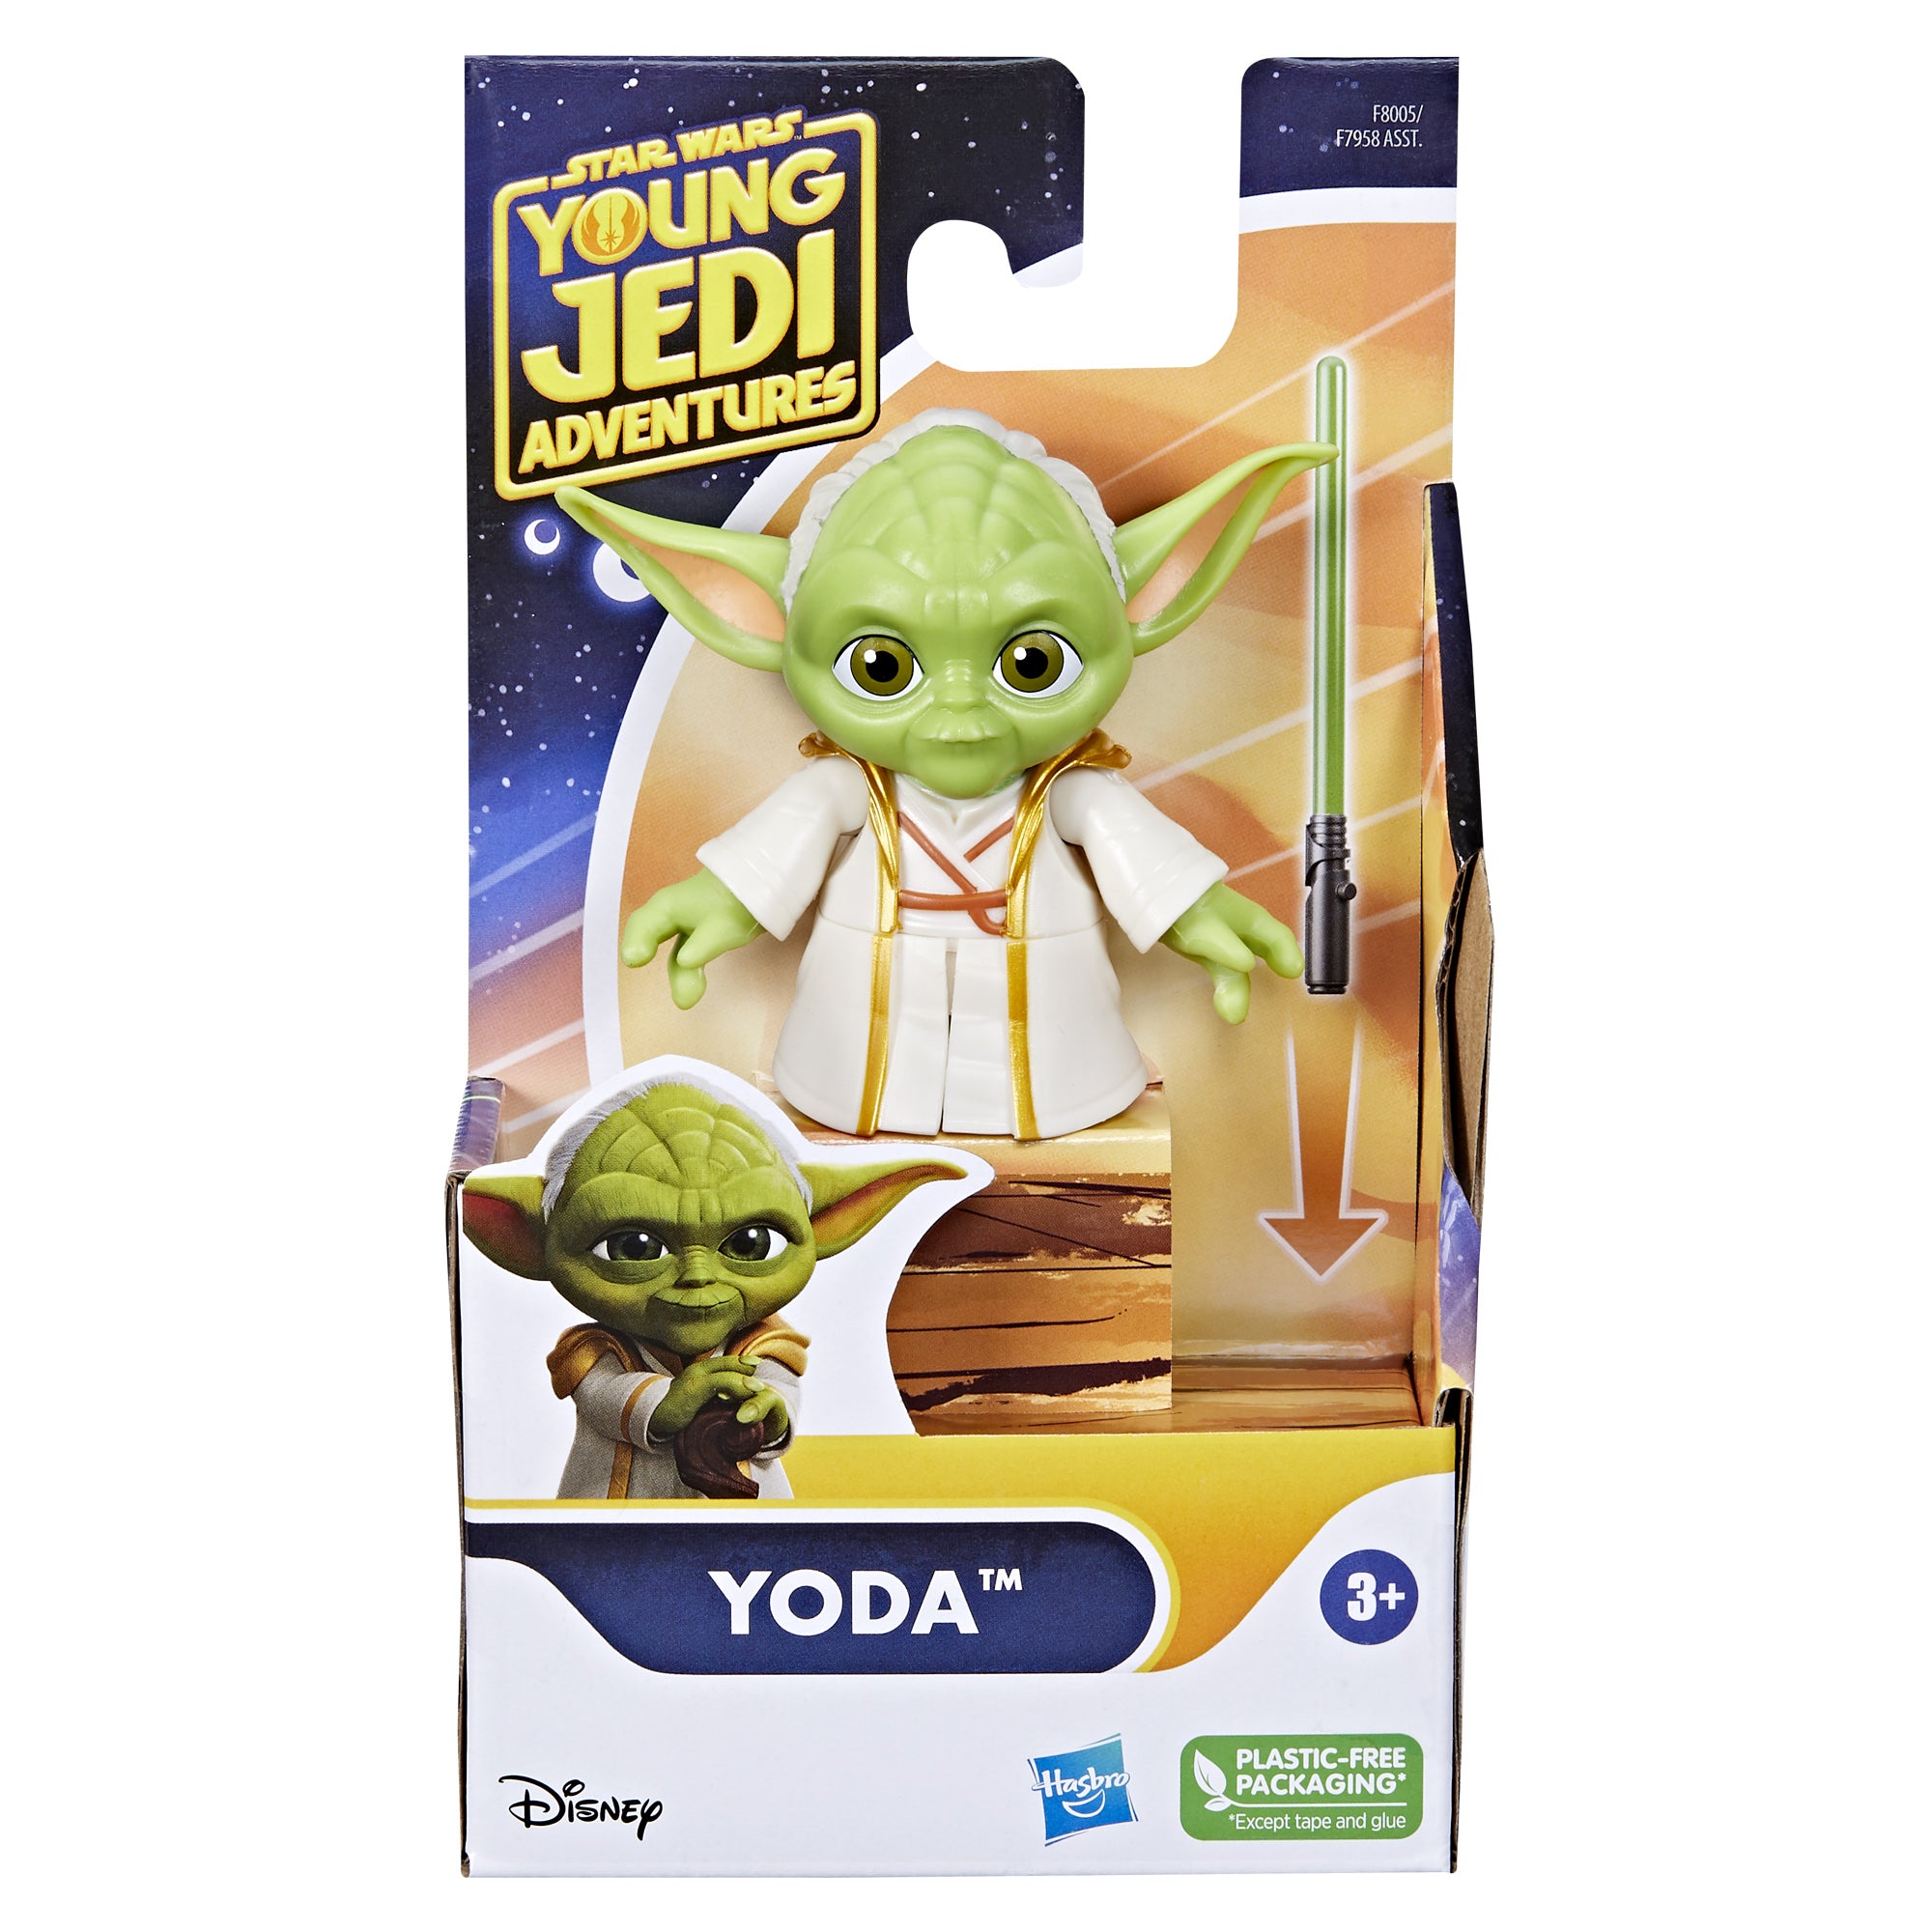 Star Wars Young Jedi Adventures Yoda Figure